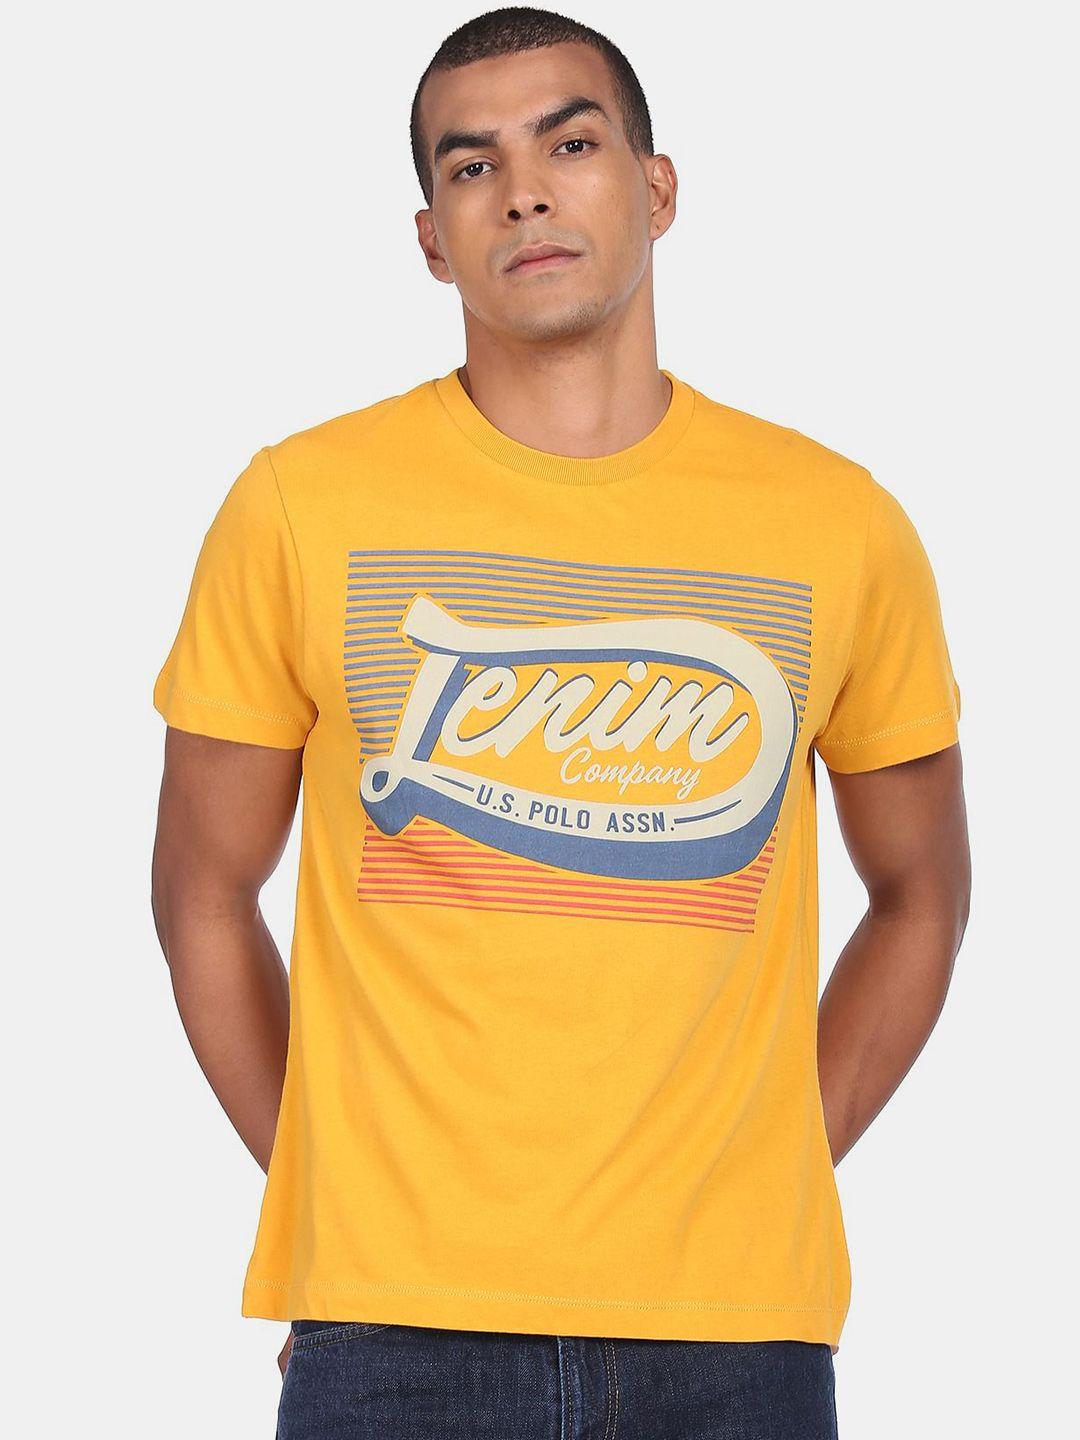 u.s. polo assn. denim co.men mustard yellow typography printed t-shirt